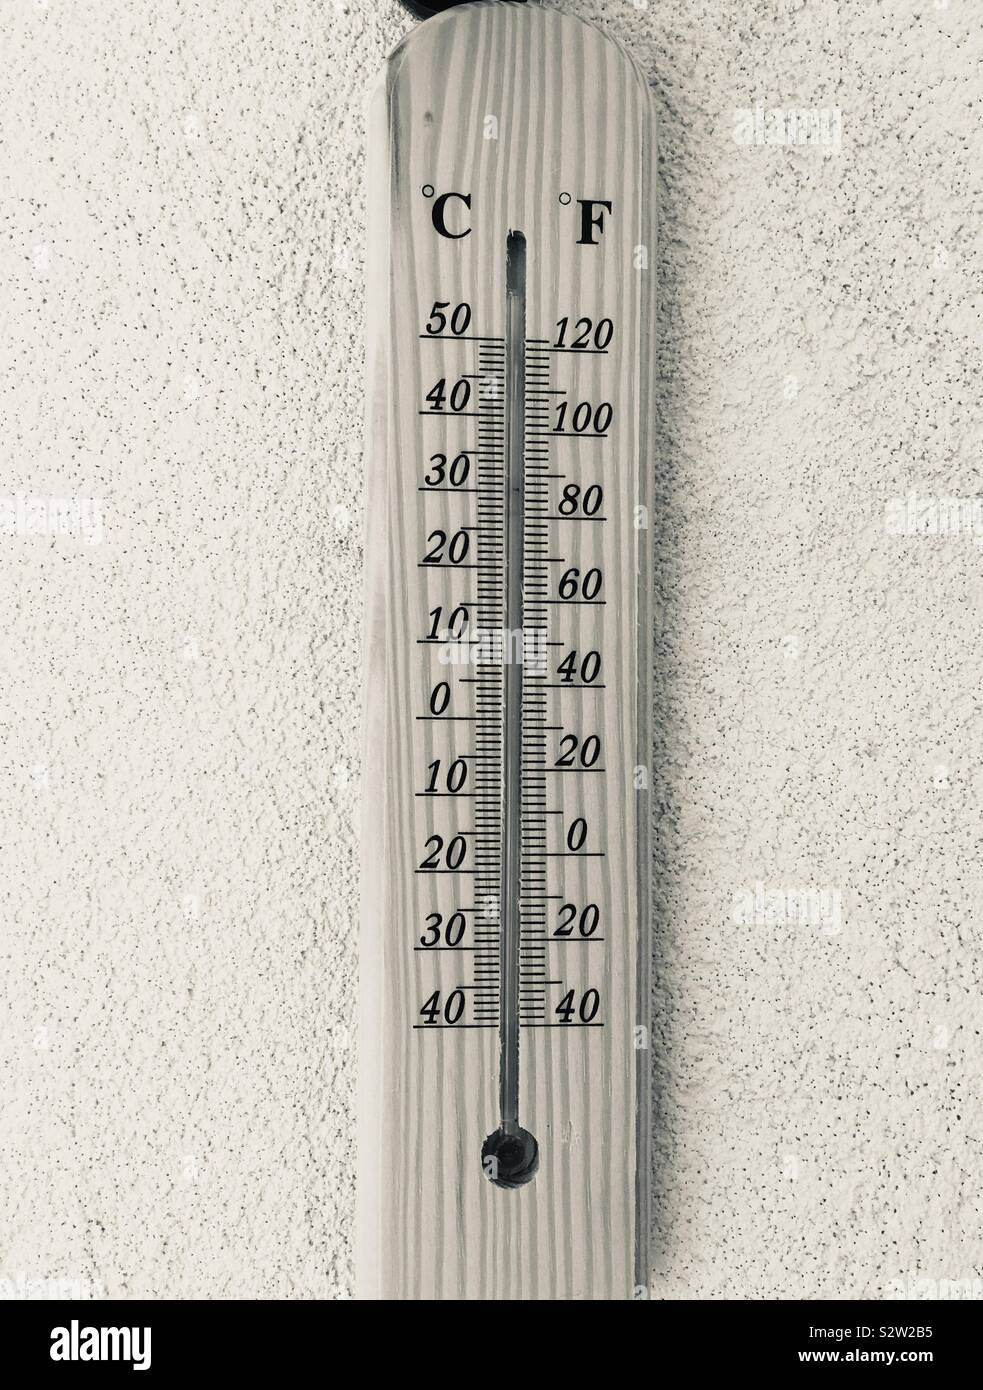 https://c8.alamy.com/comp/S2W2B5/outdoor-wall-thermometer-S2W2B5.jpg